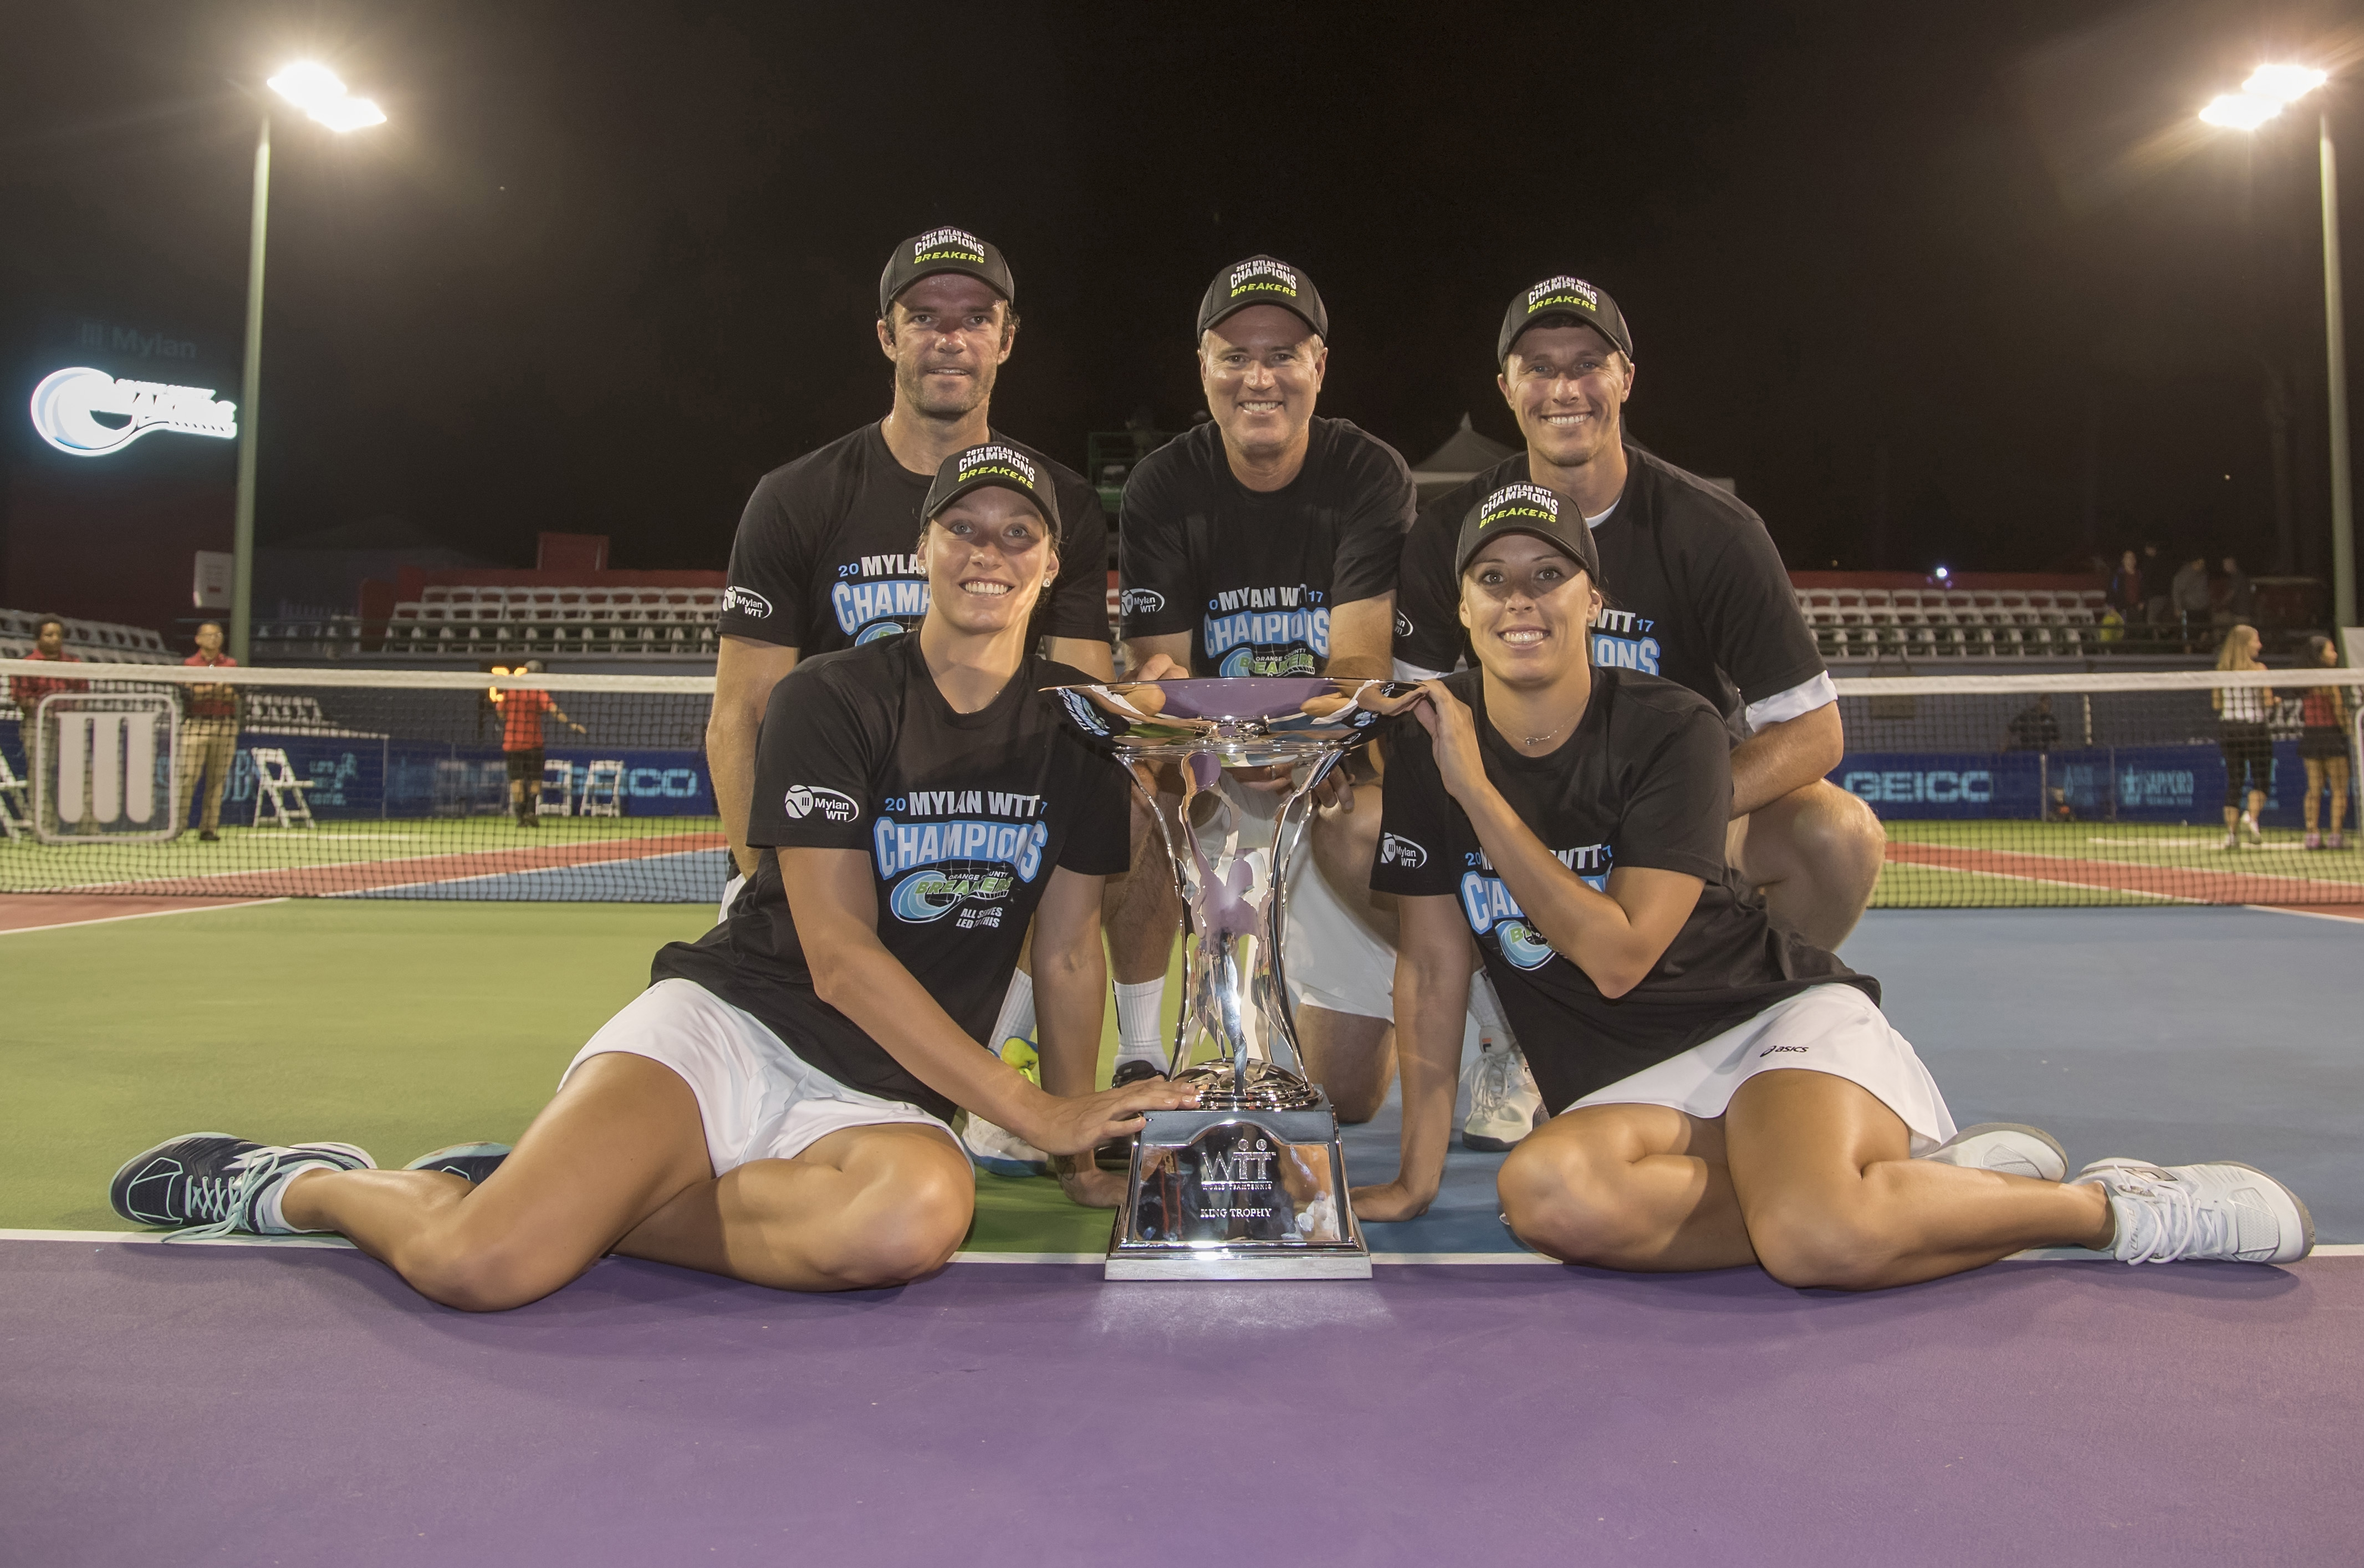 Orange County Breakers Win Second World Team Tennis Title